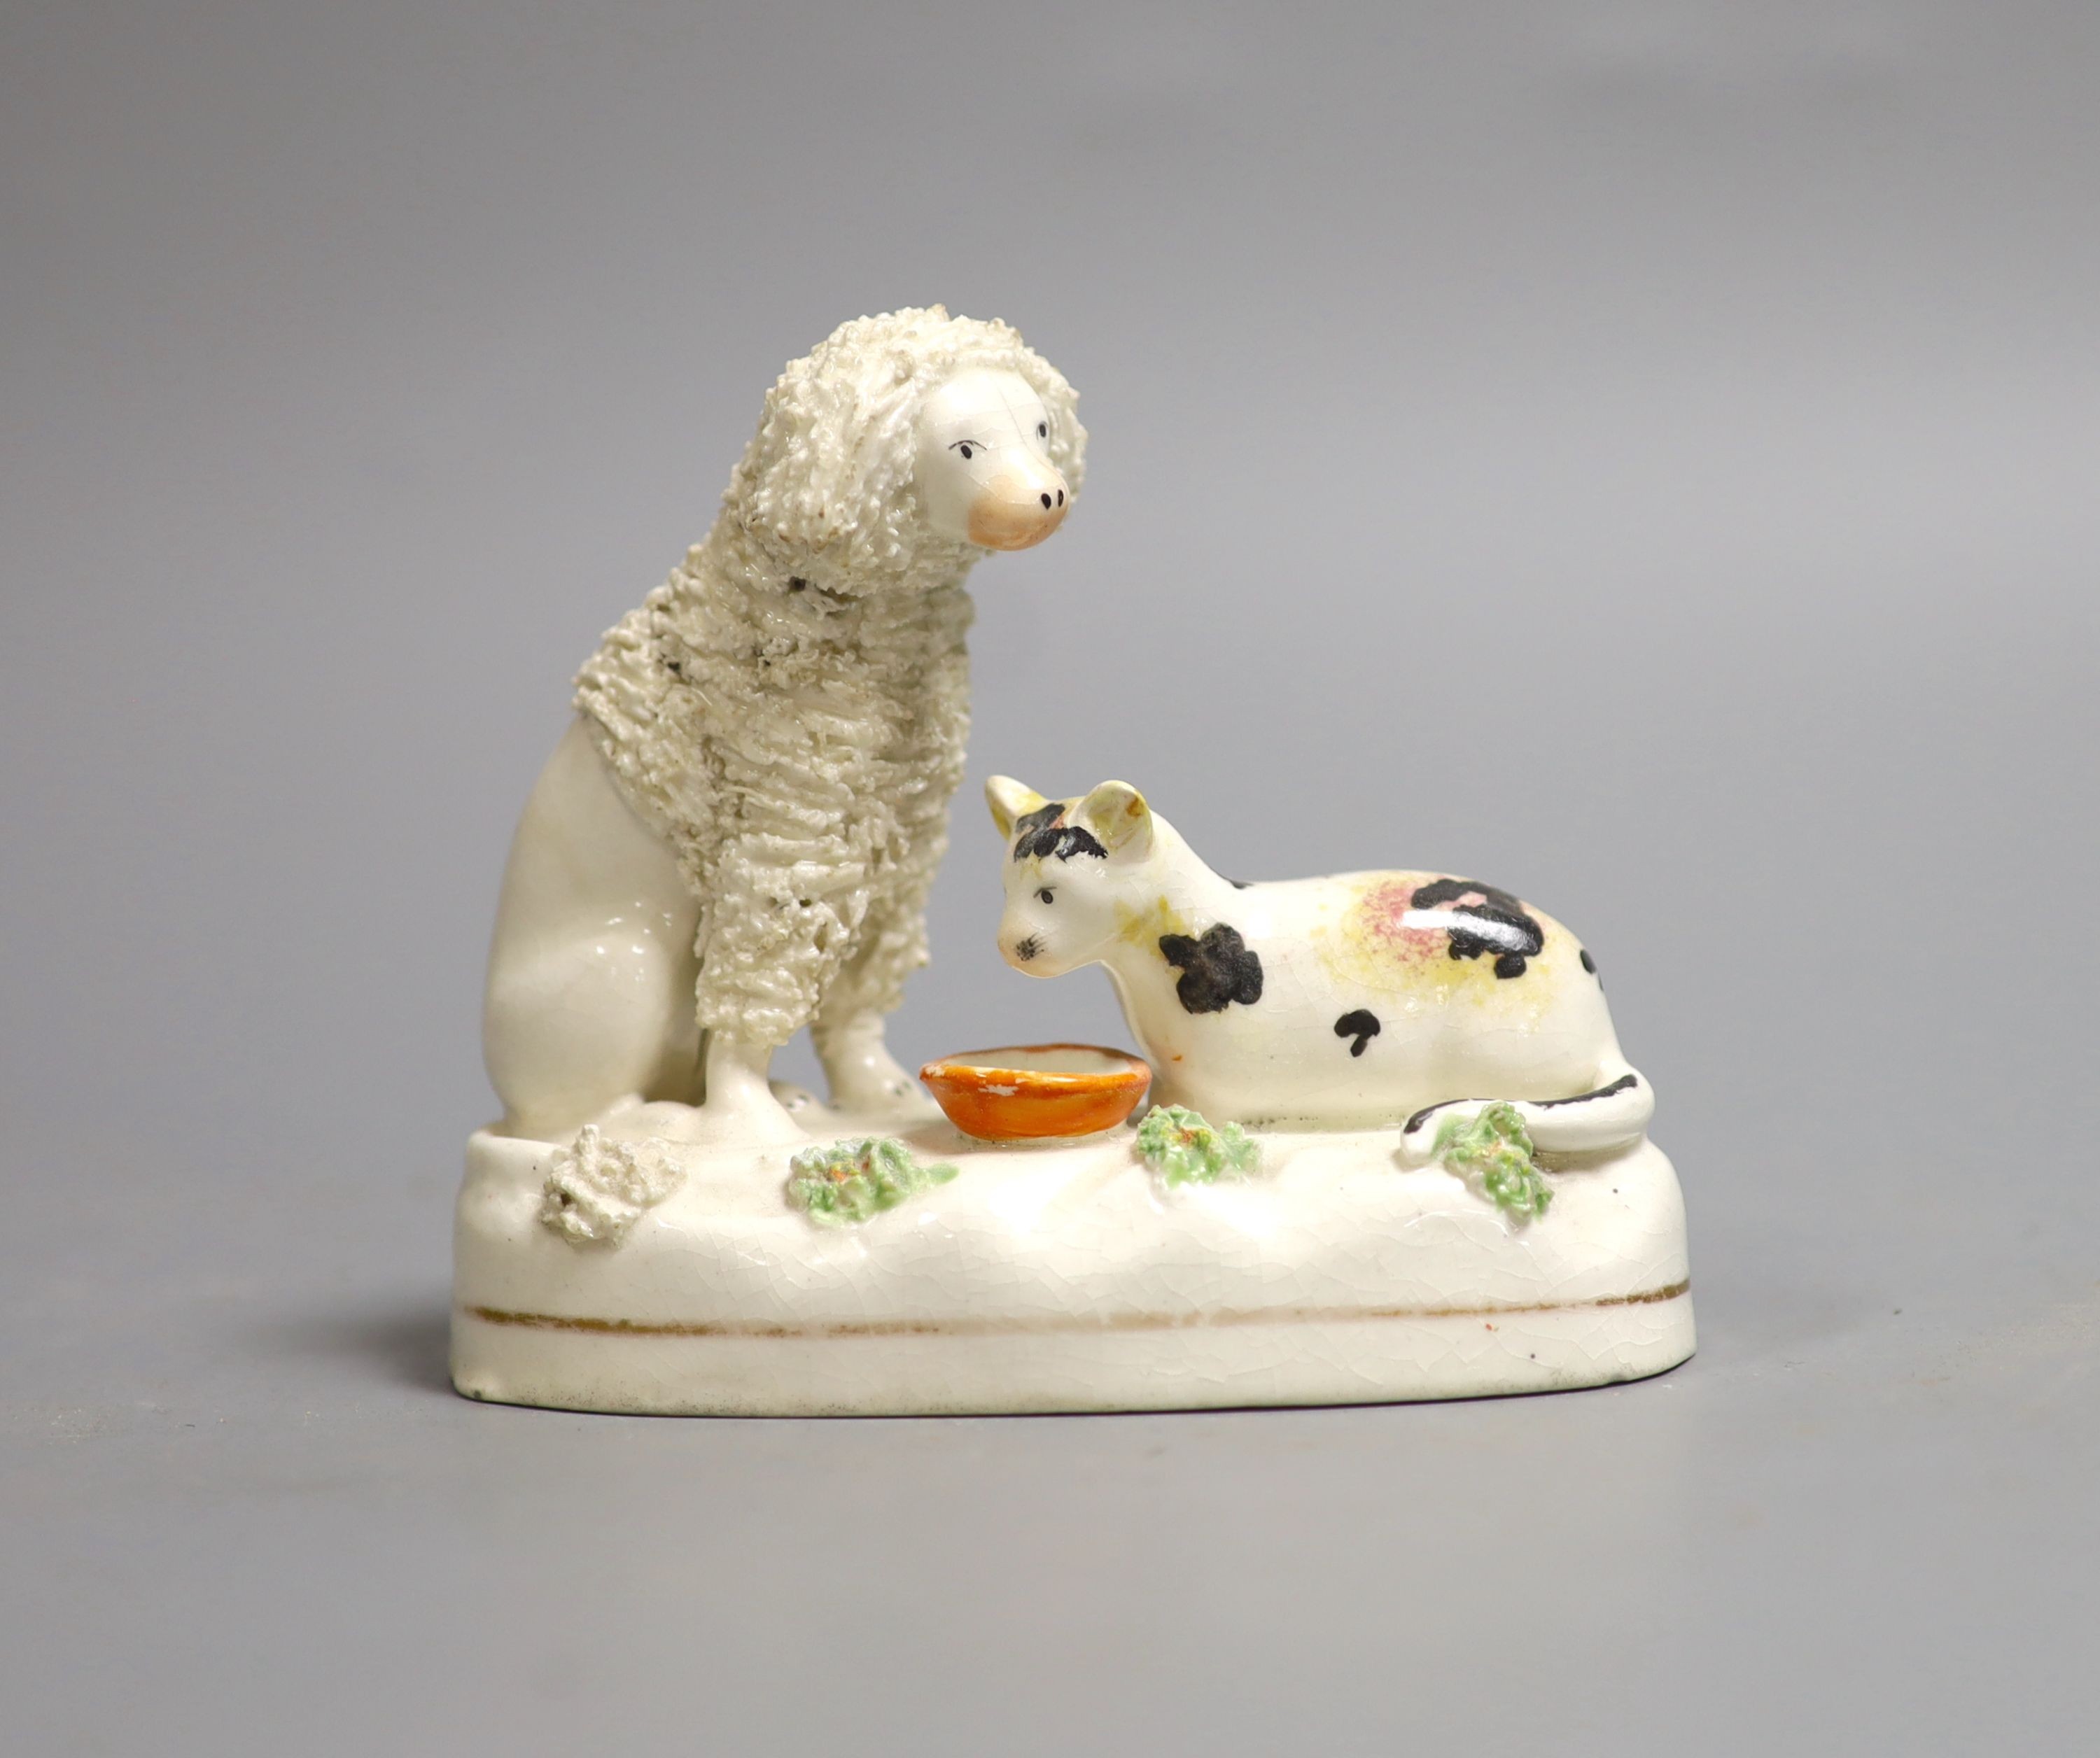 A Staffordshire porcelain group of a poodle and a cat, c.1830-50, 11 cm long